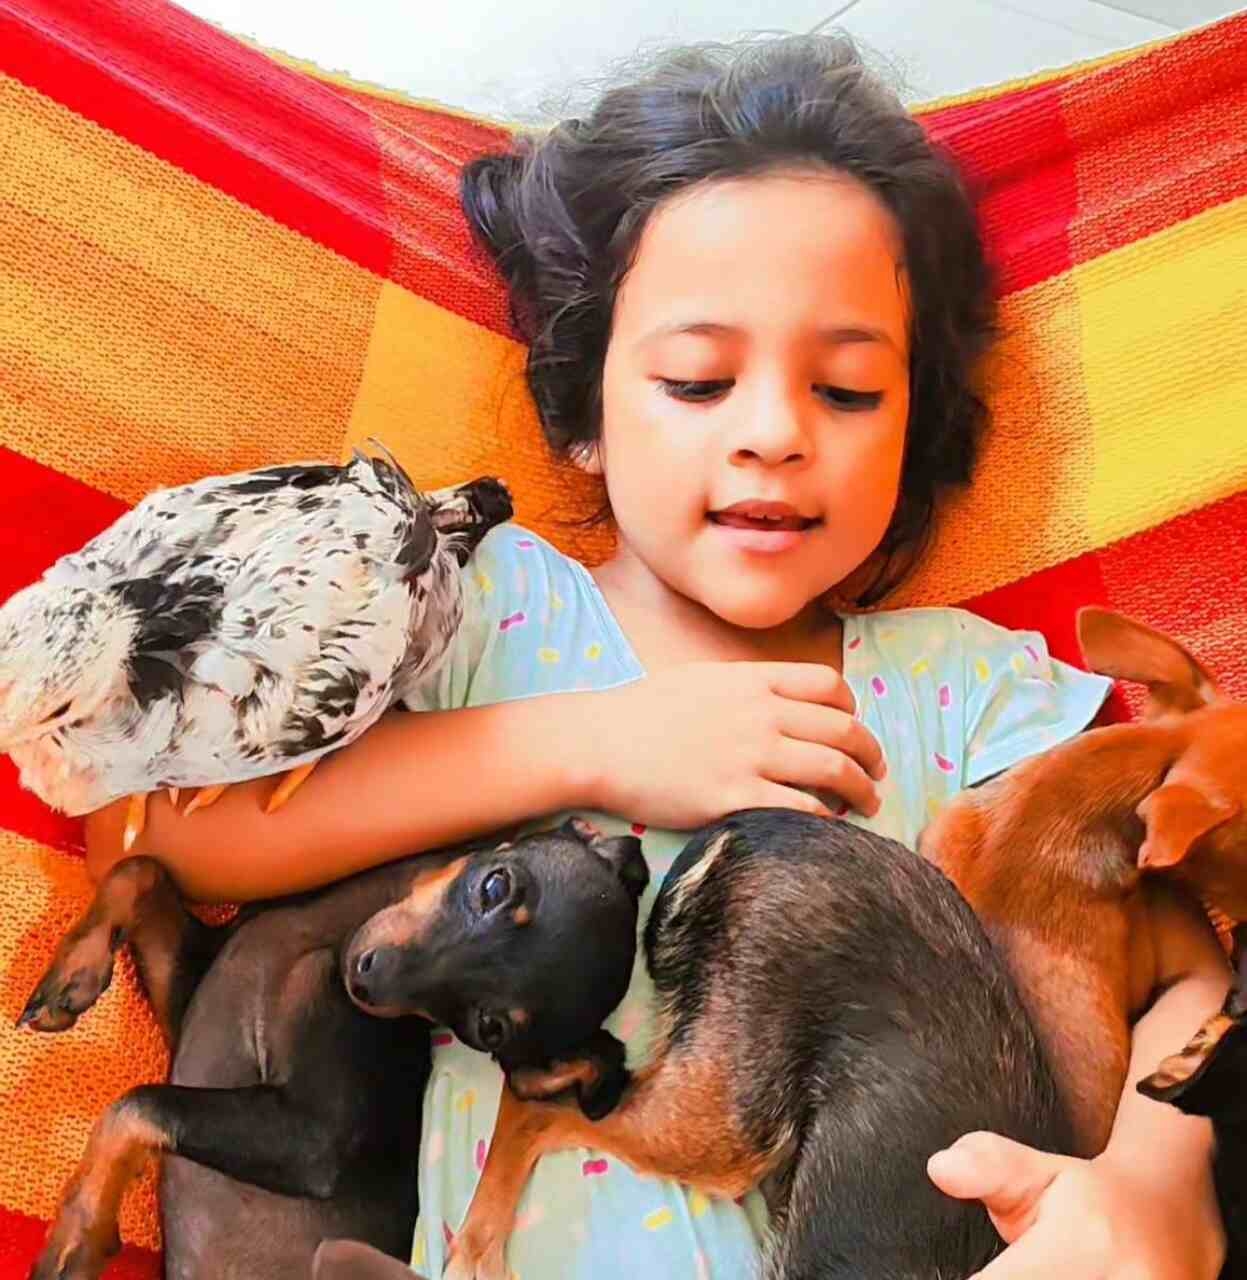 Helena Sophia, de apenas cinco anos, de Rio Branco, no Acre, faz vídeos nas redes sociais cuidando de seus animais pinscher.